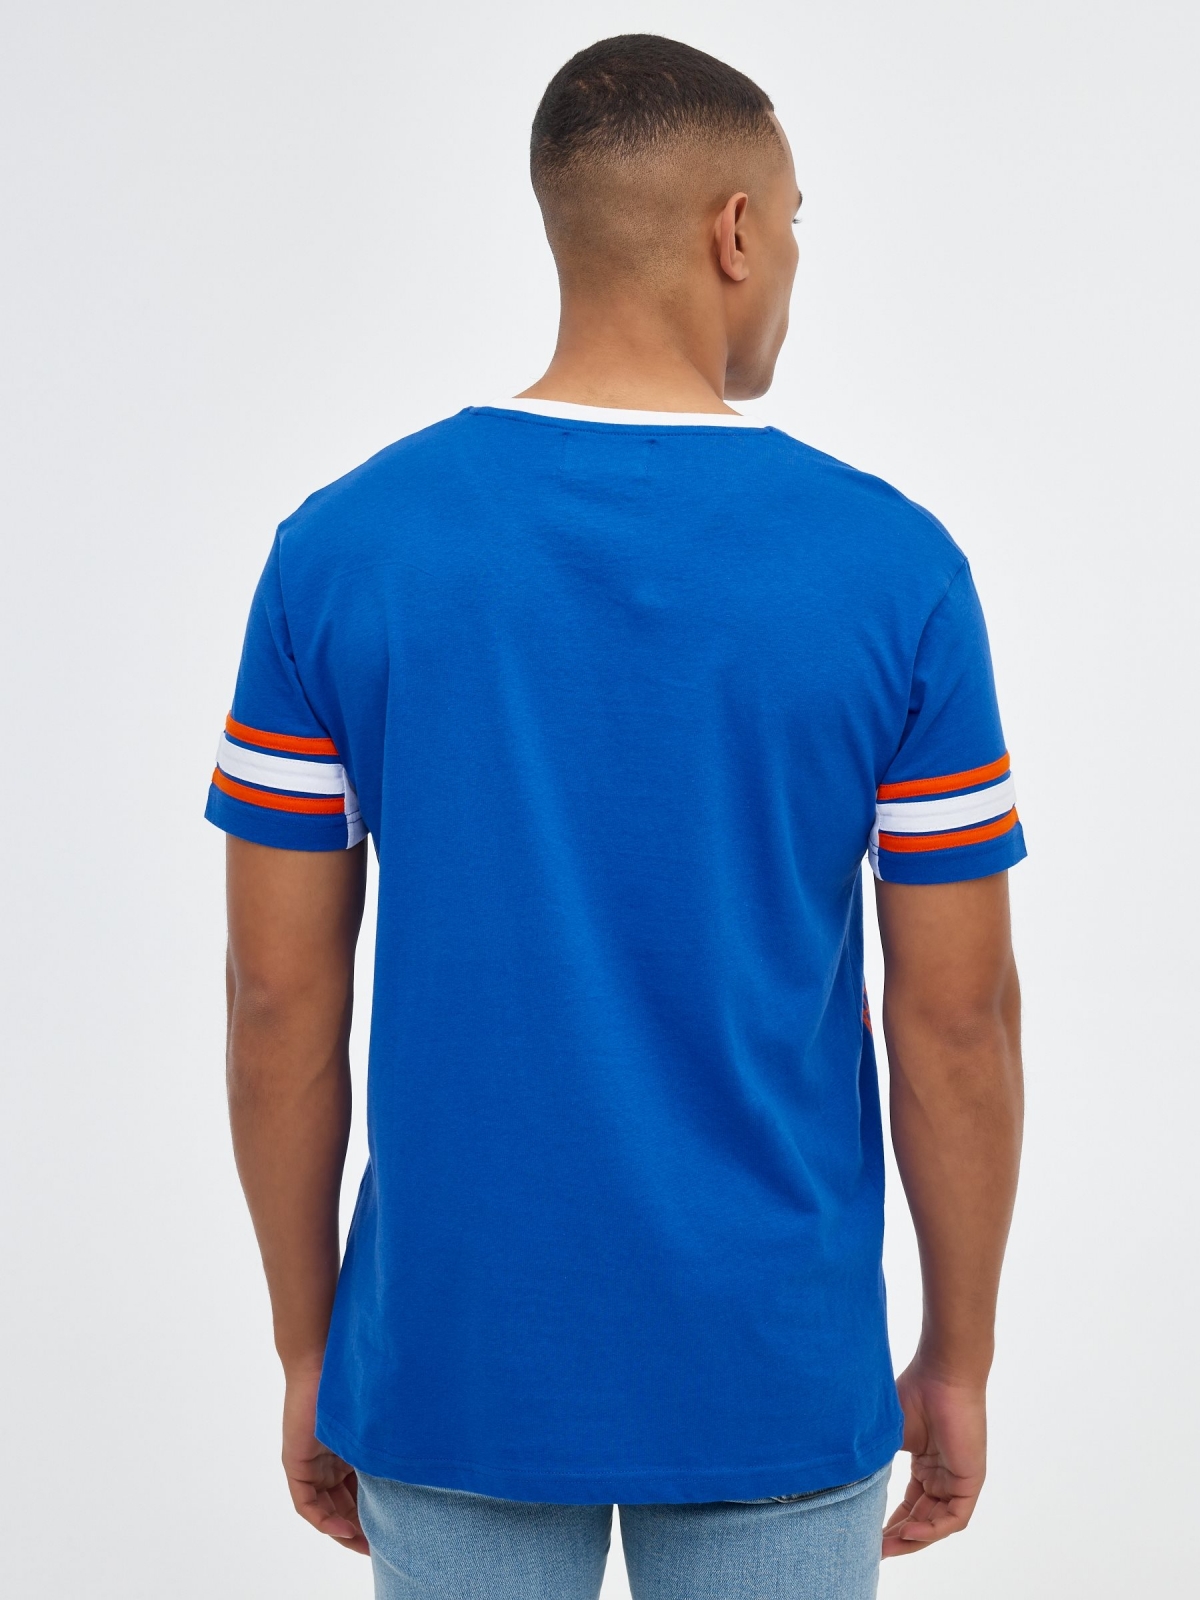 Camiseta deportiva azul eléctrico vista media trasera